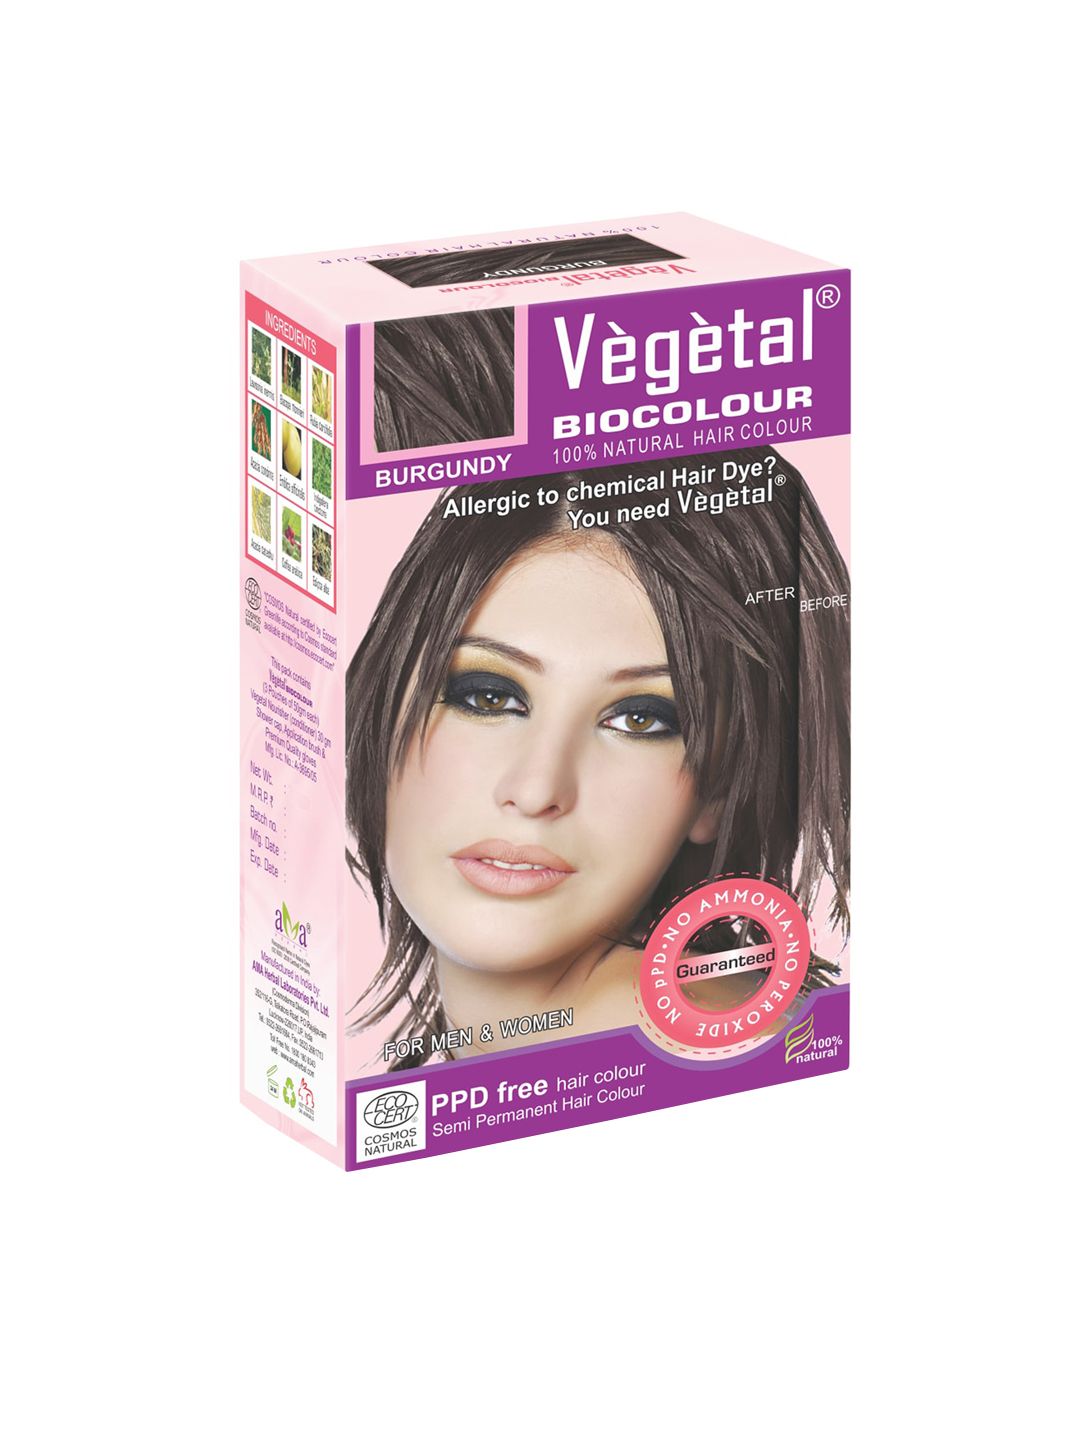 Vegetal Burgundy Bio Hair Colour 50 gm Price in India